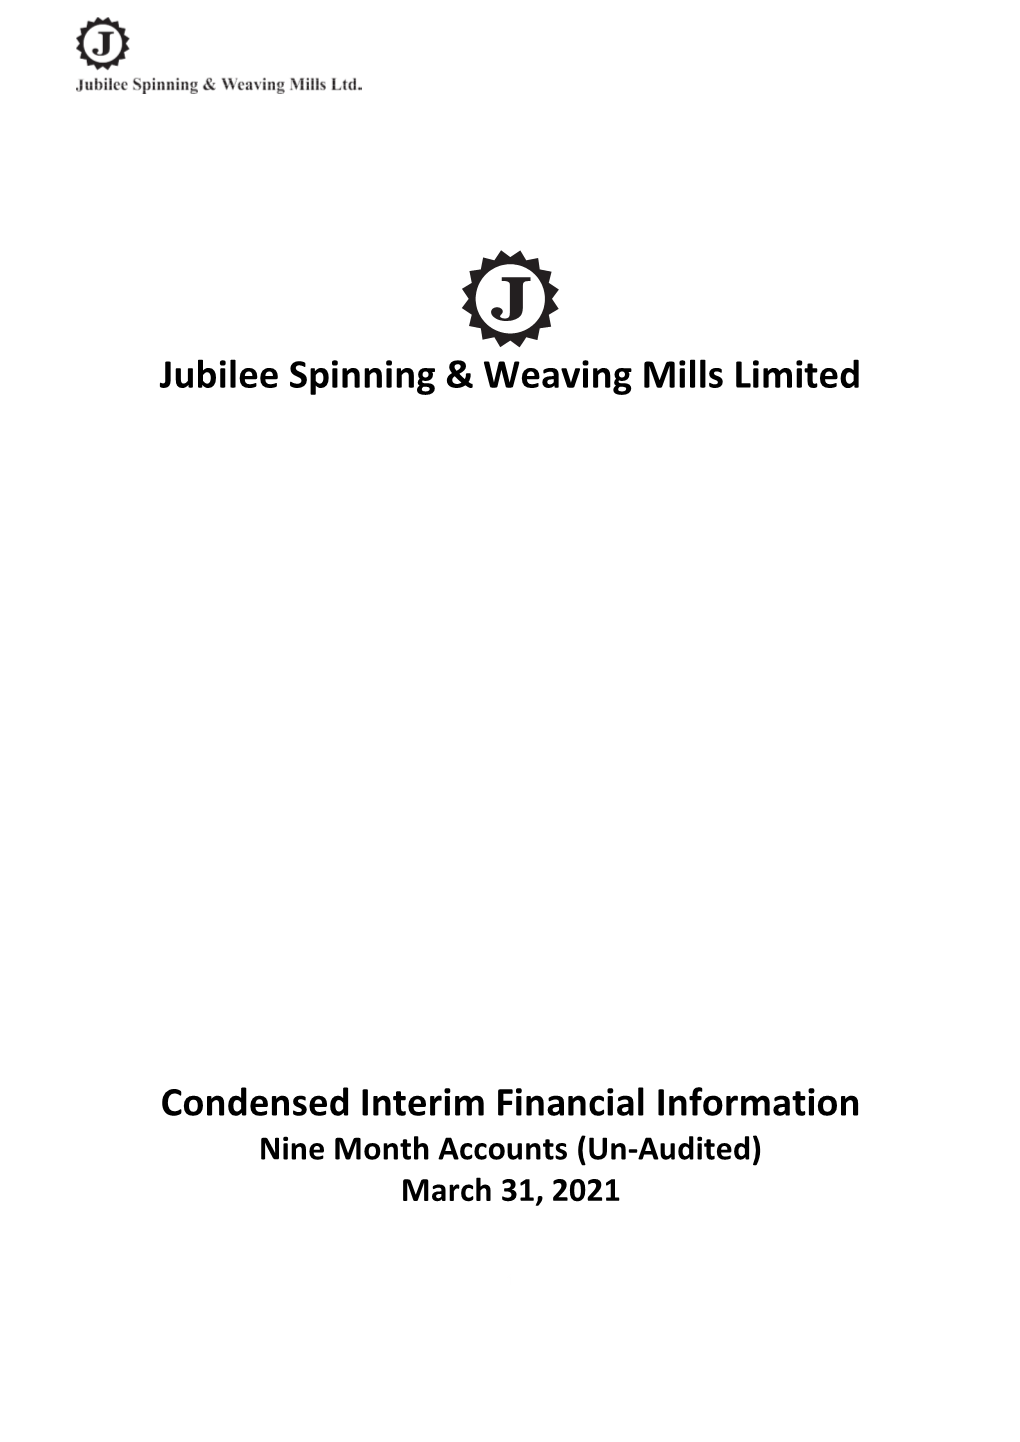 Jubilee Spinning & Weaving Mills Limited Condensed Interim Financial Information